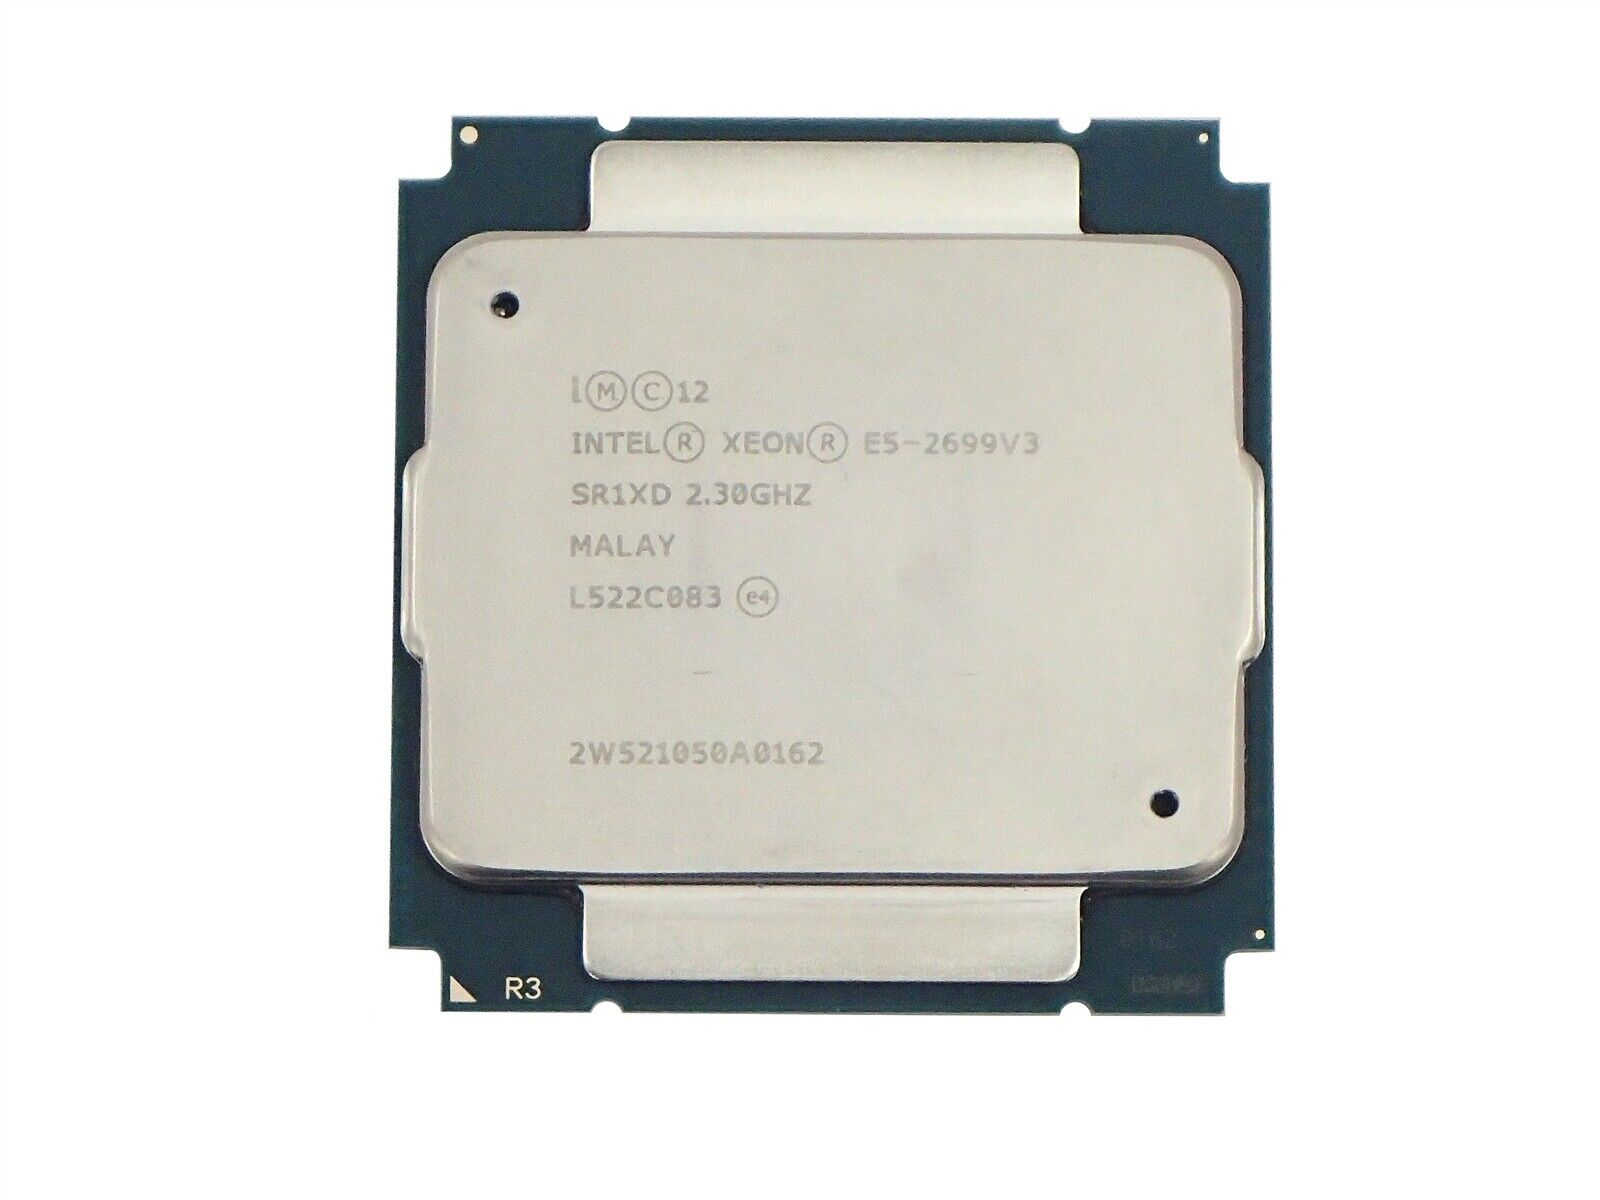 Intel Xeon E5-2699 V3 SR1XD 2.3GHz 18 Core LGA2011-3 Server Processor